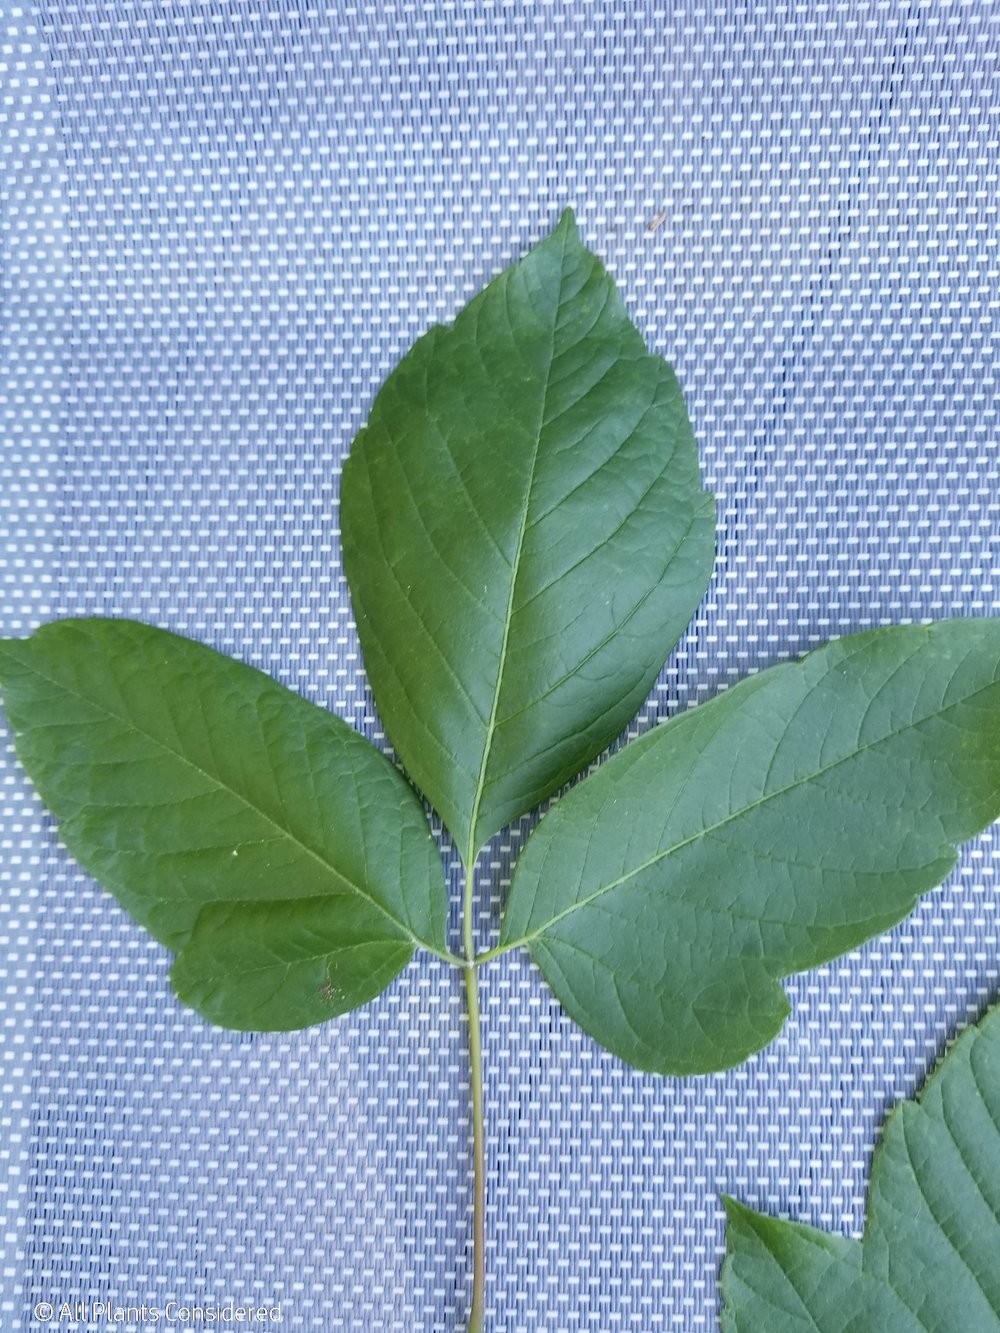 Box Elder Leaf Morphology 1.jpg